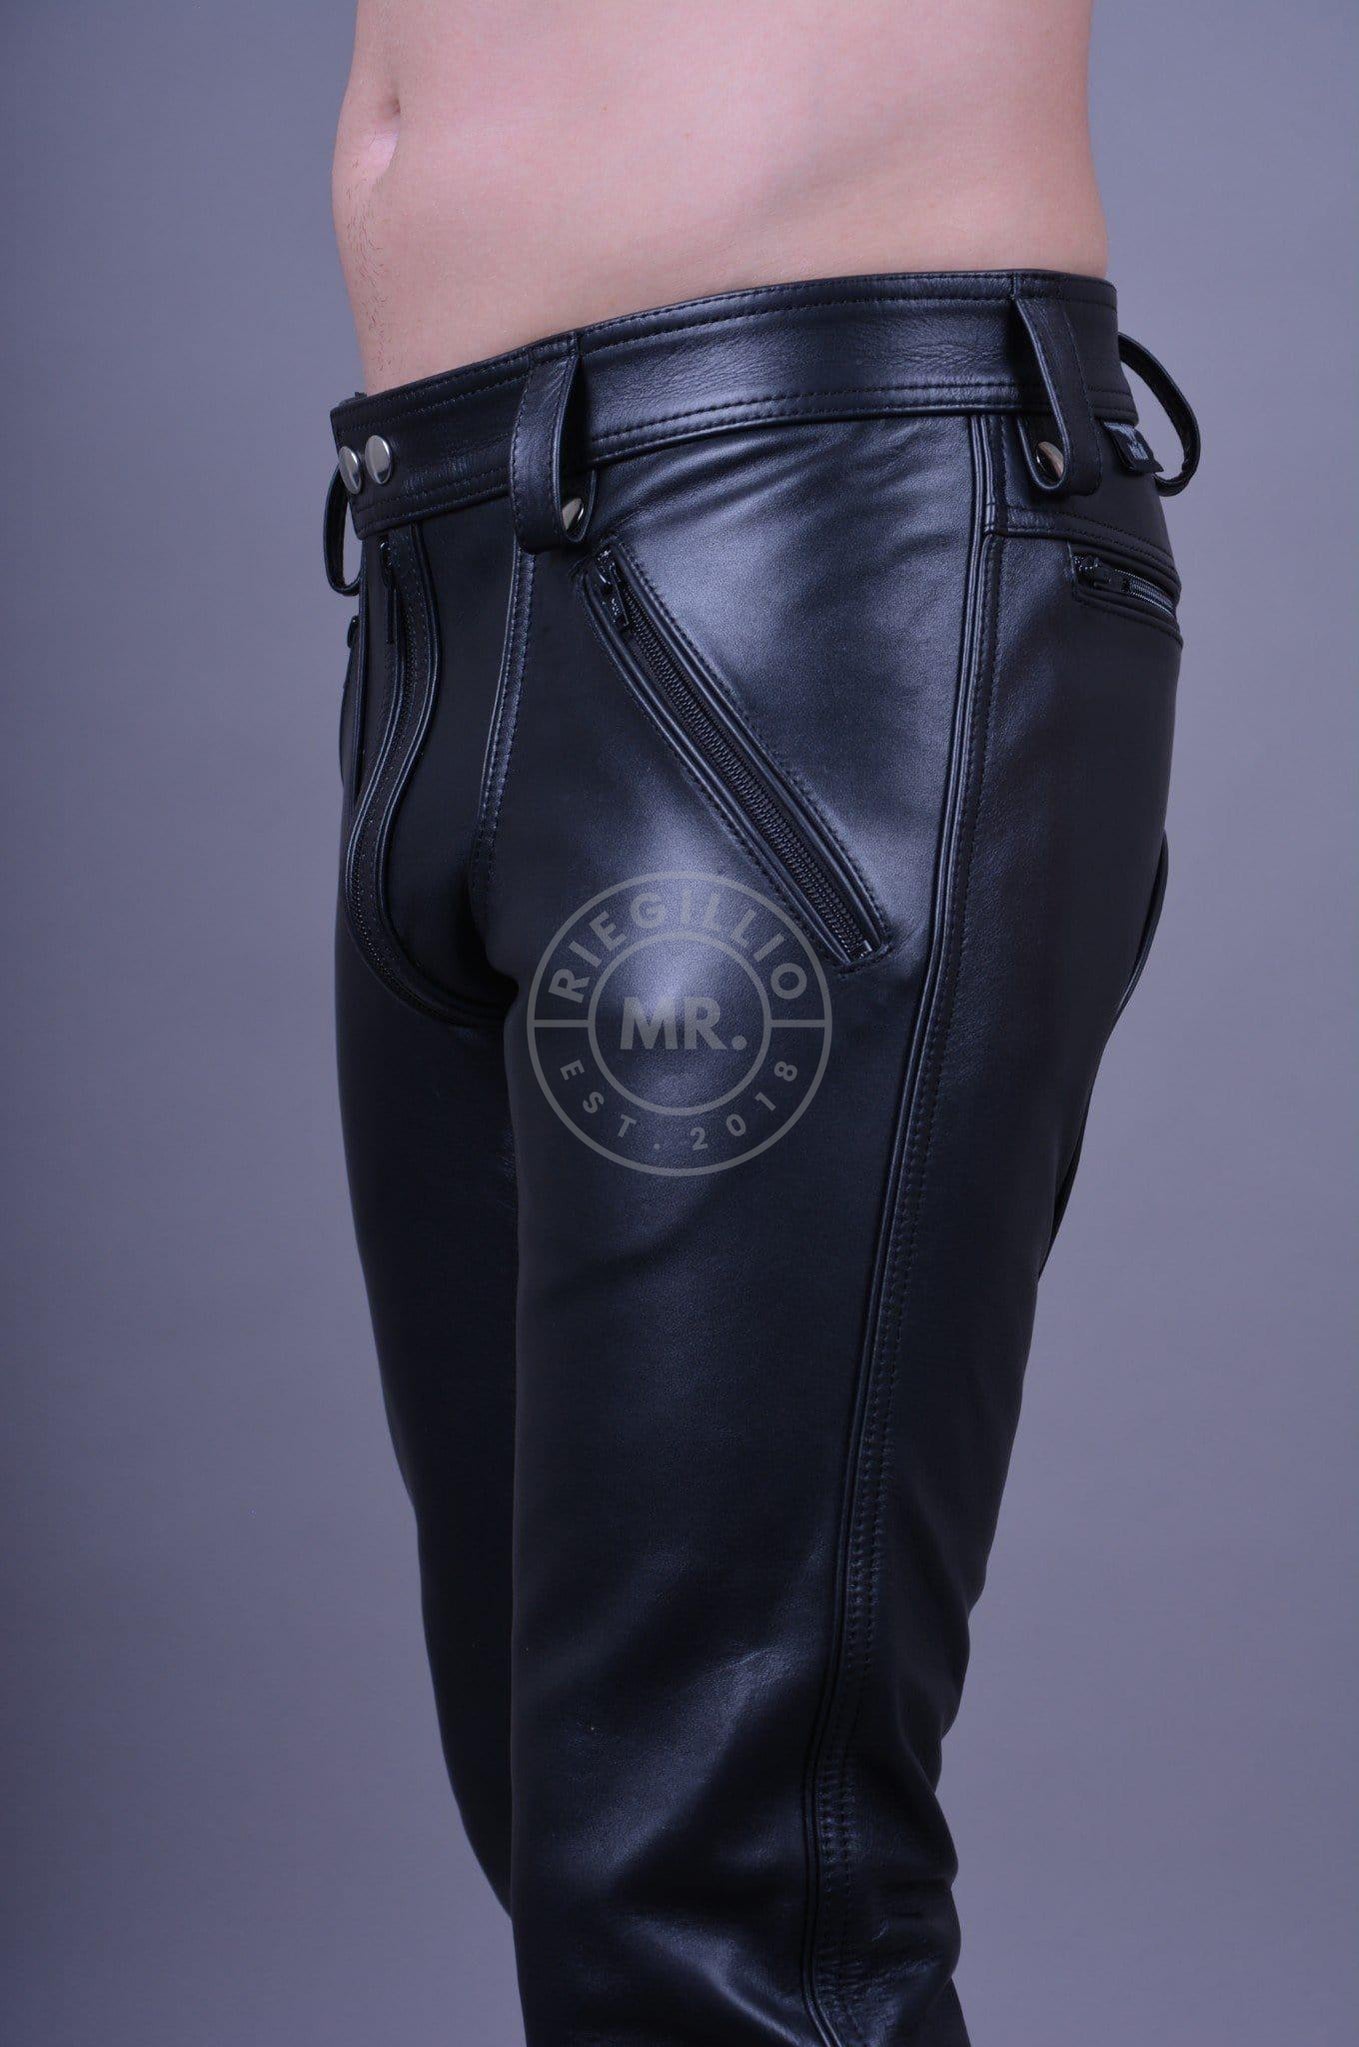 Mister B Leather FXXXer Jeans All Black-at MR. Riegillio